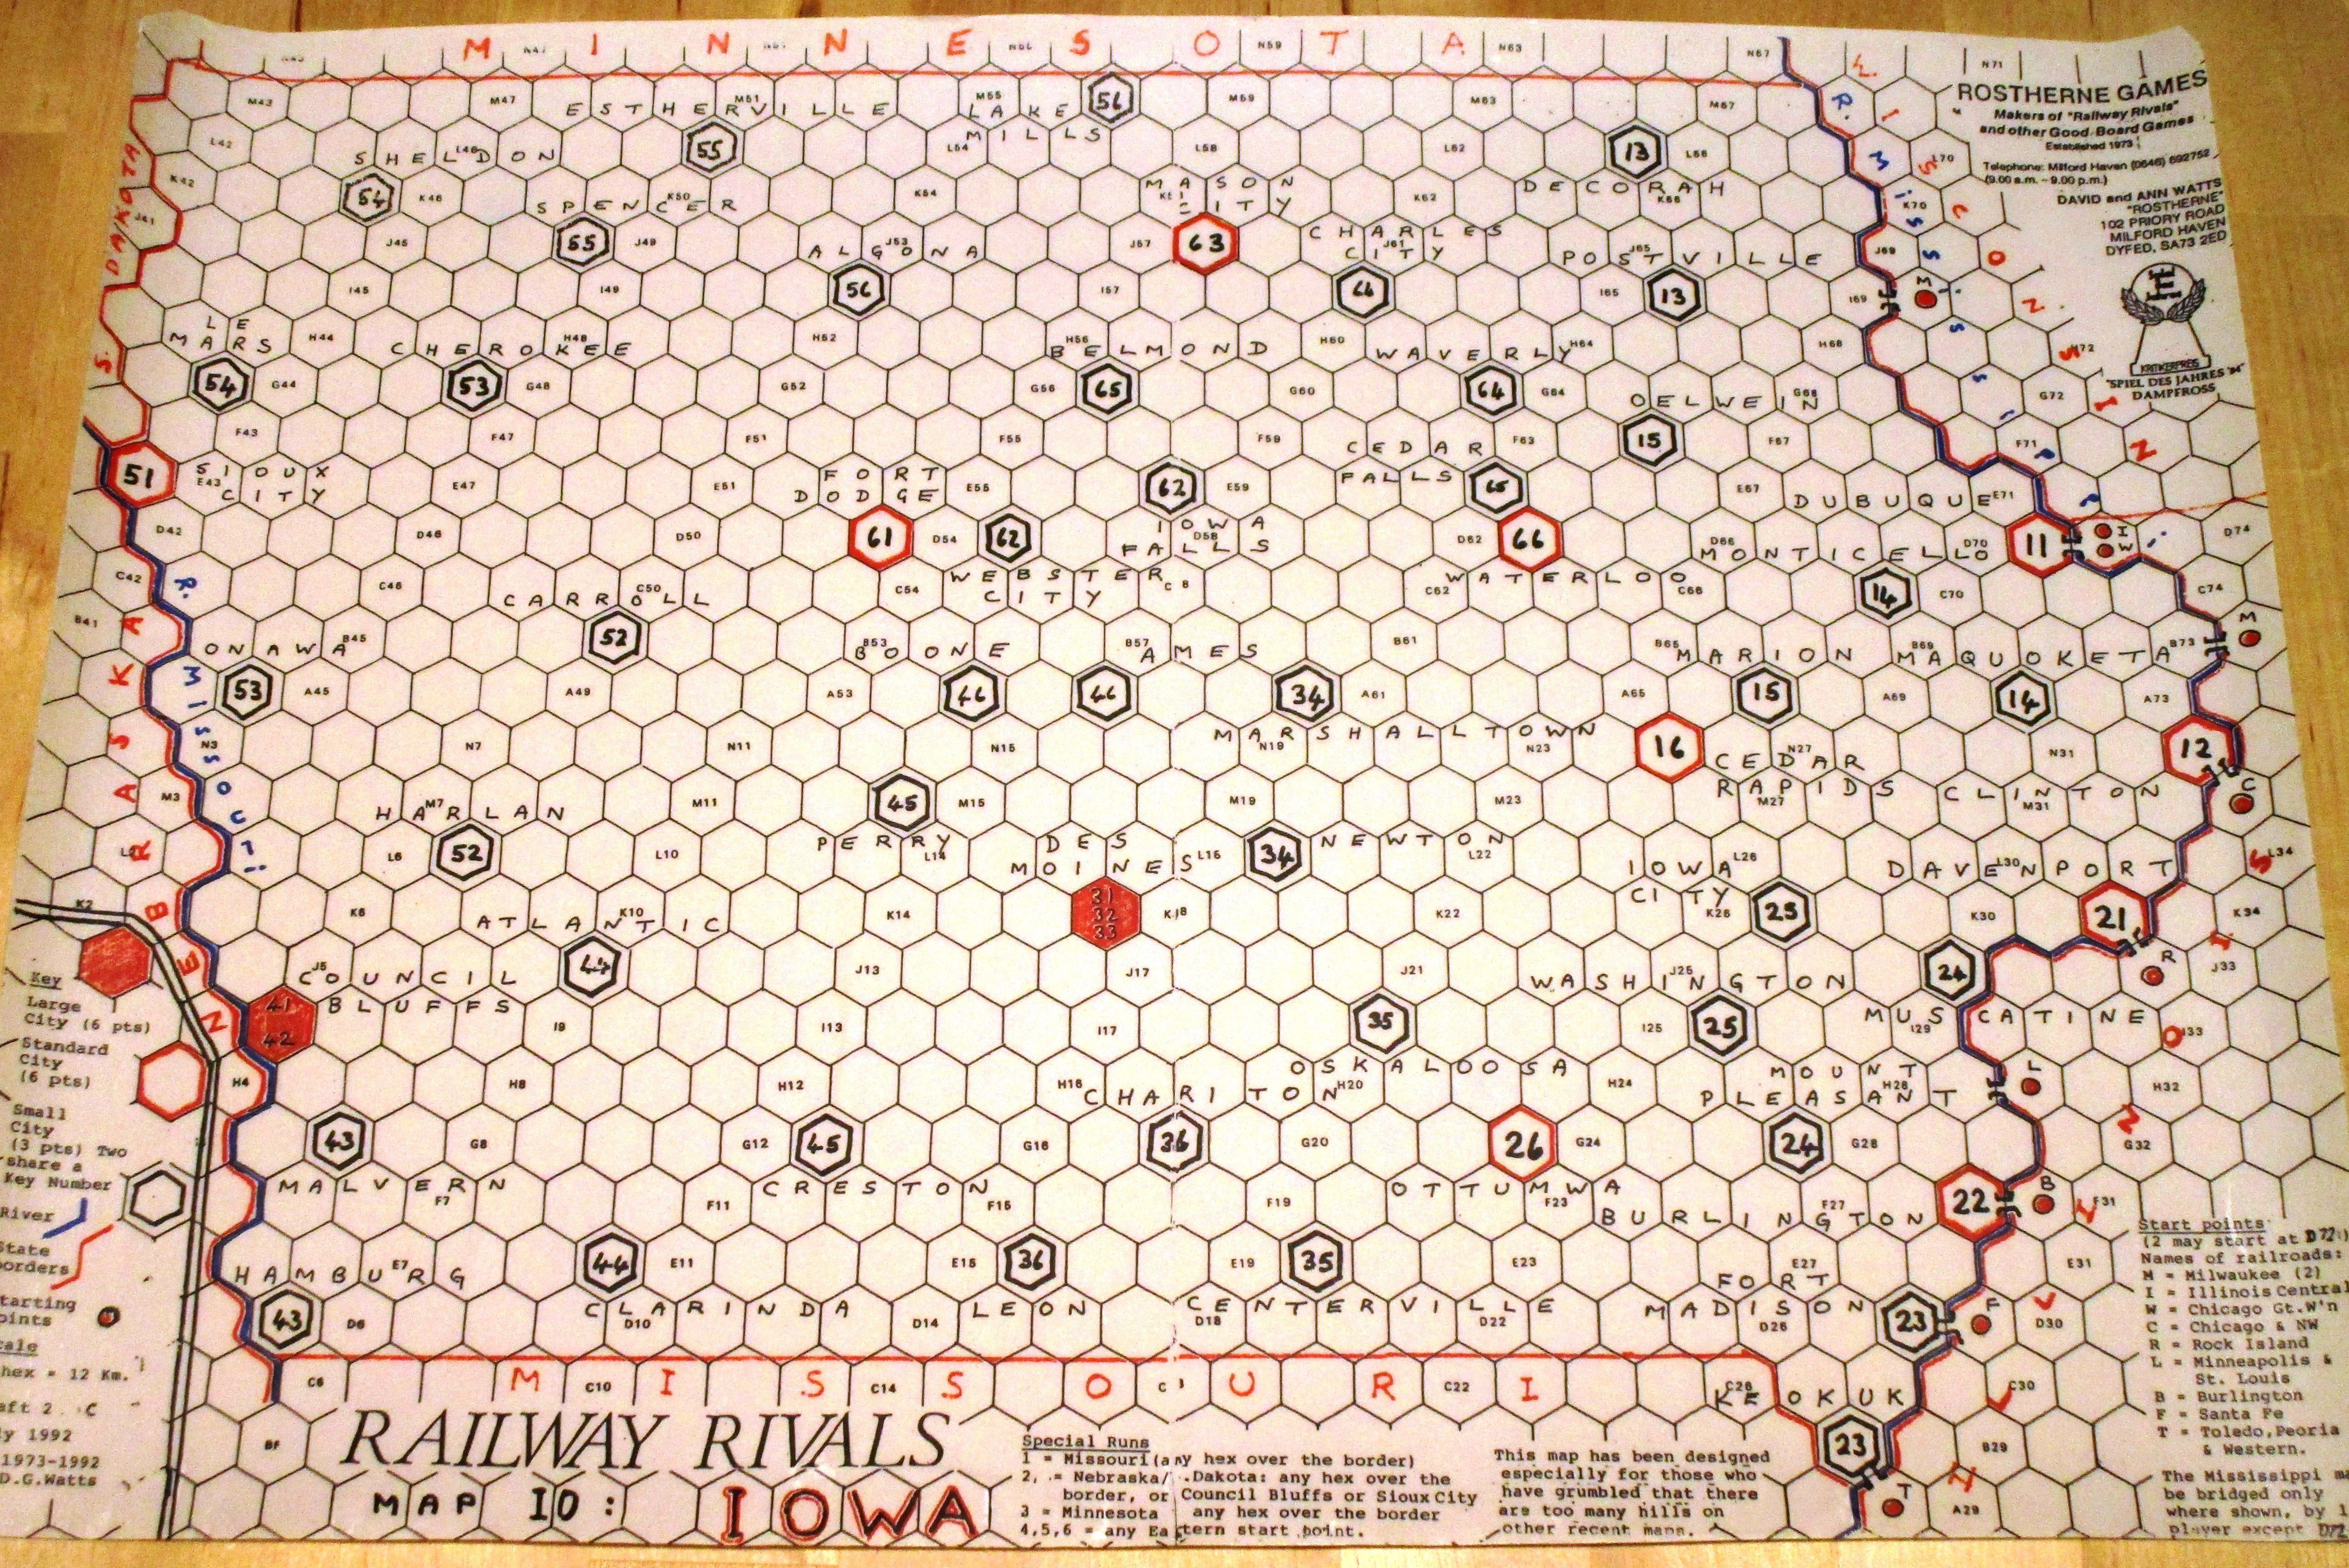 Railway Rivals Map IO: Iowa